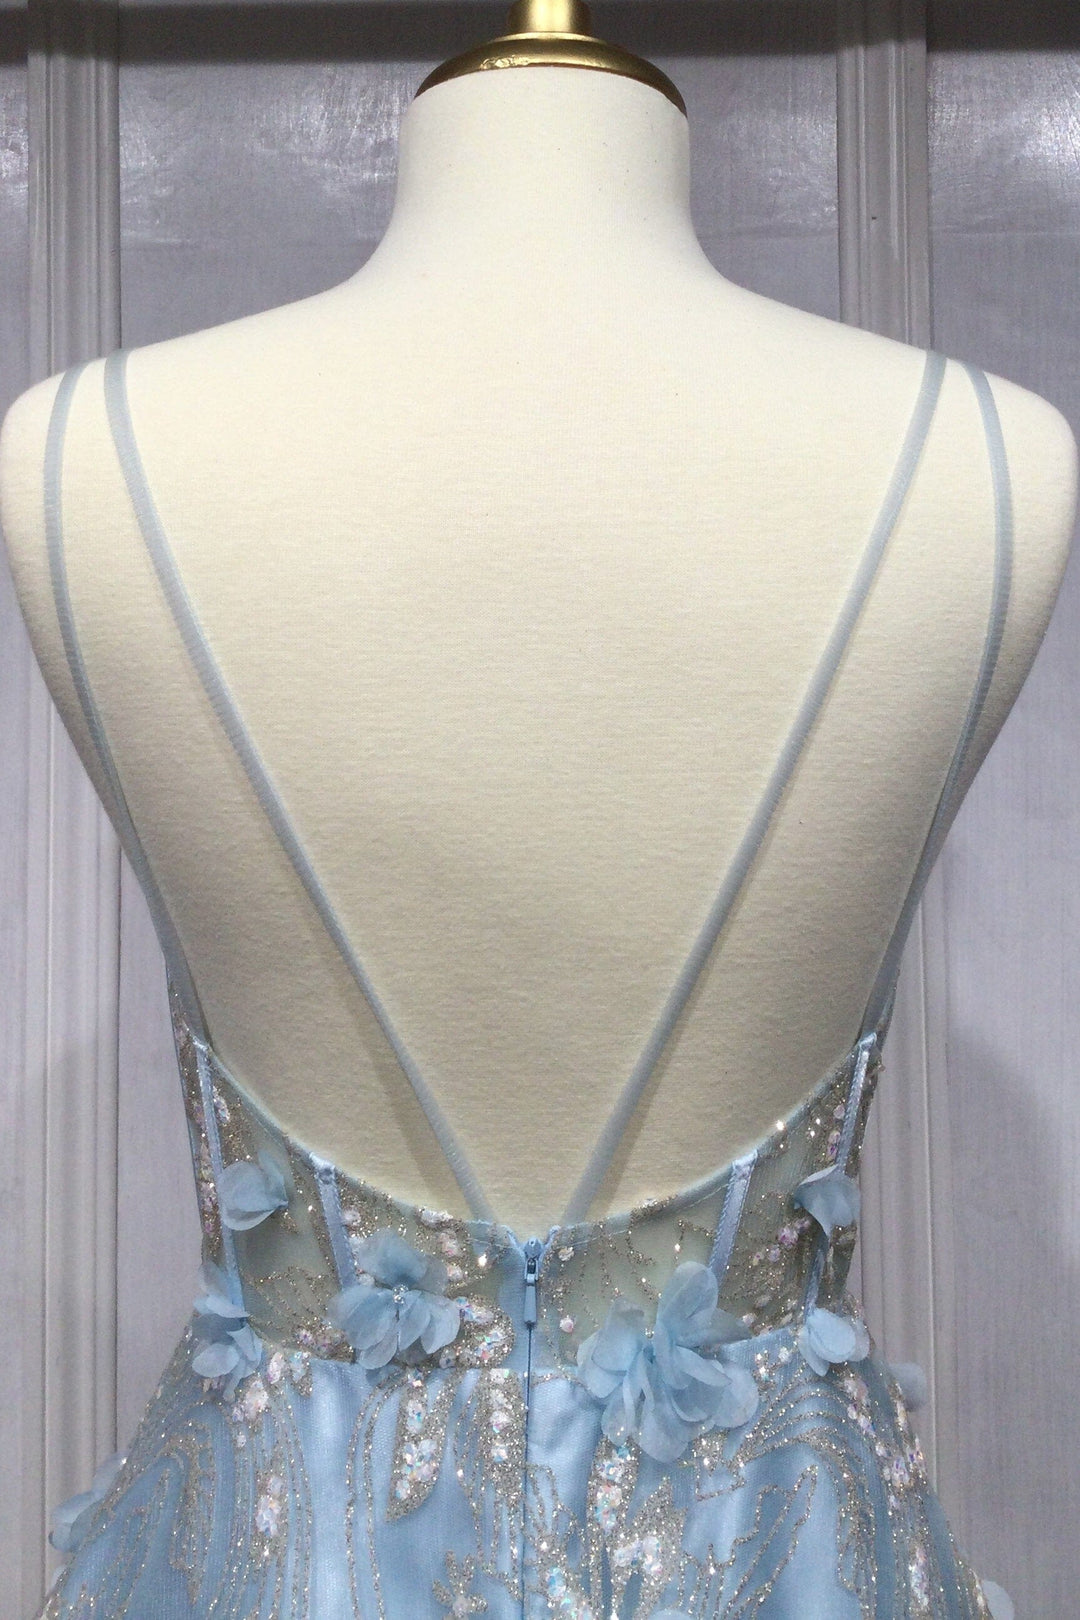 3D Floral Applique Ball Gown by Ladivine CB105